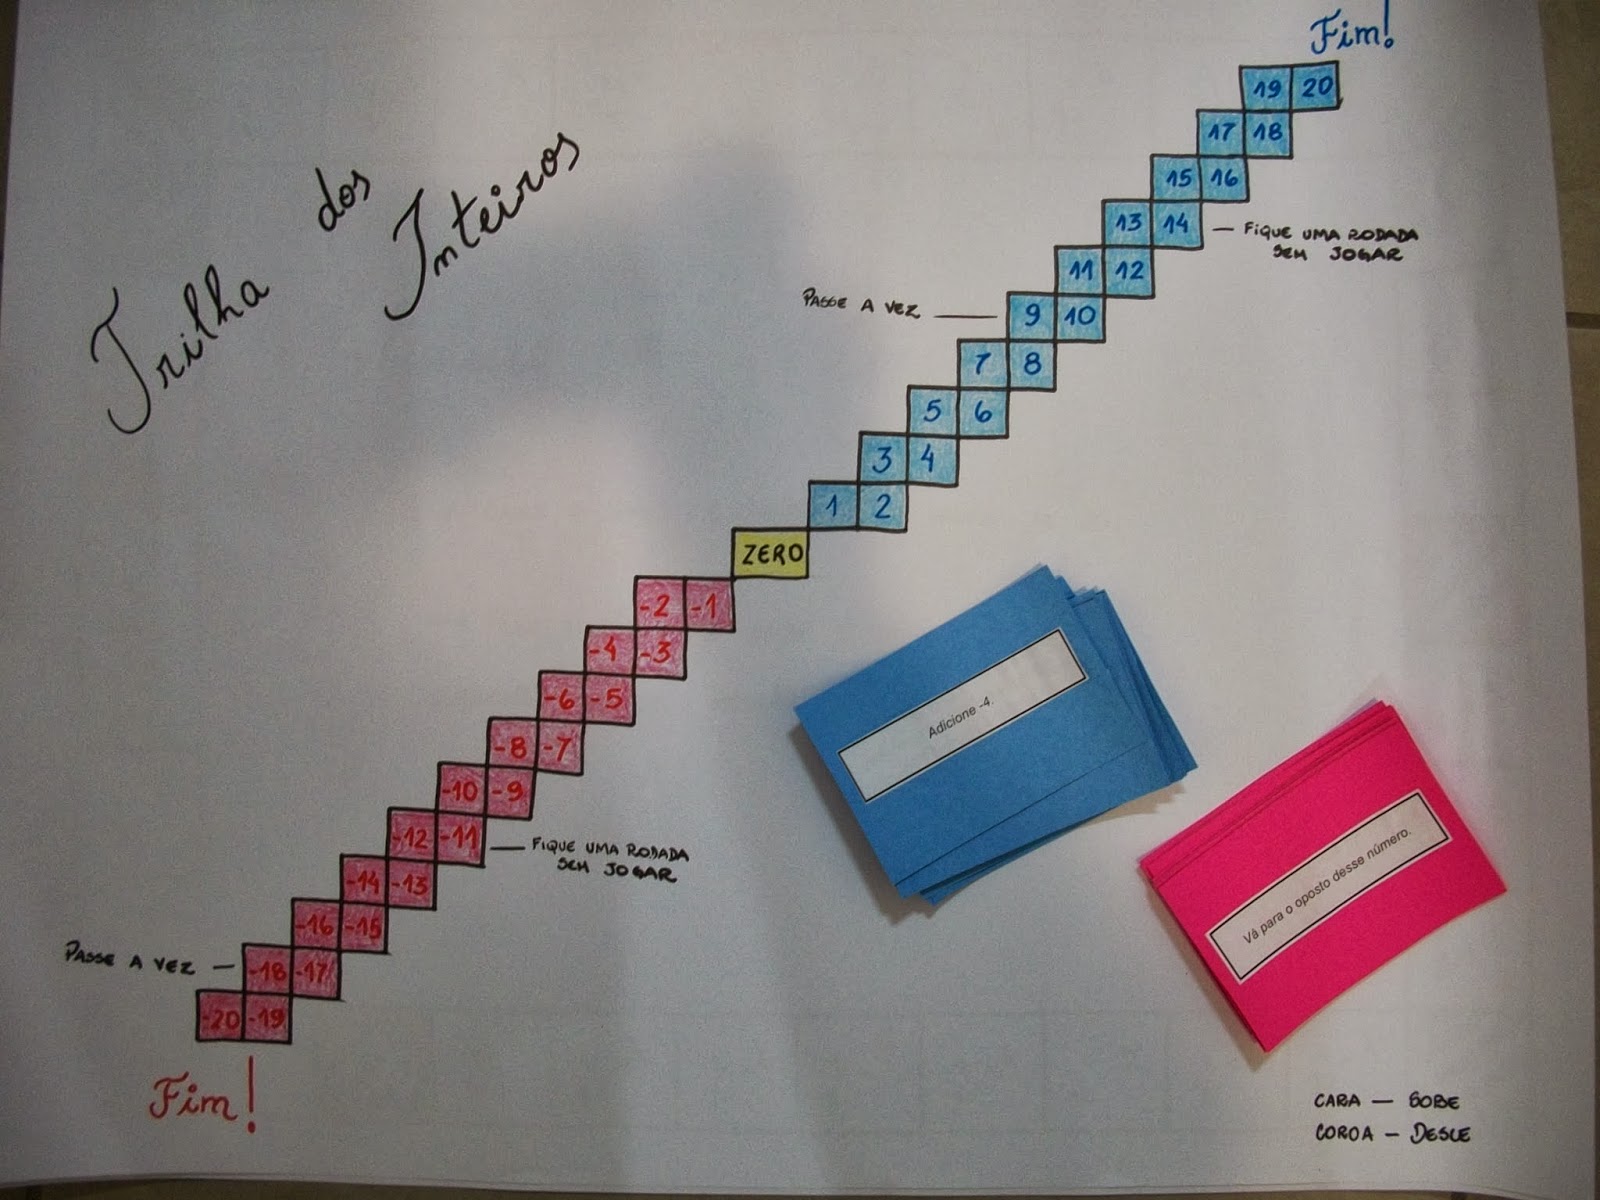 Tabuleiro com trilha. Figura 2: Marcadores coloridos e dado.